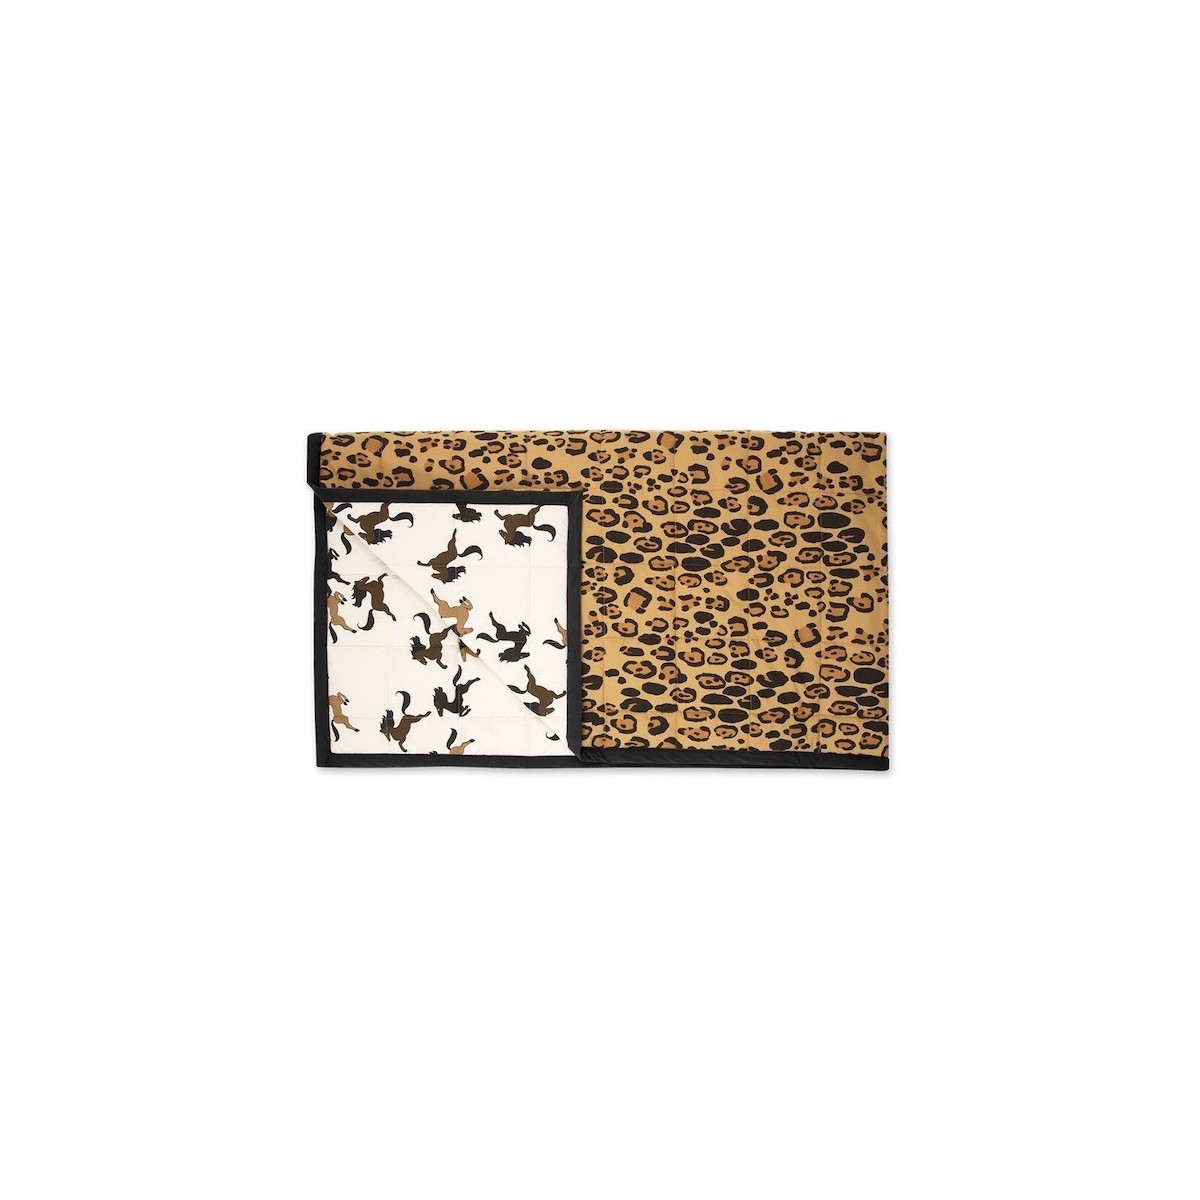 Leopard / Horse - bedspread